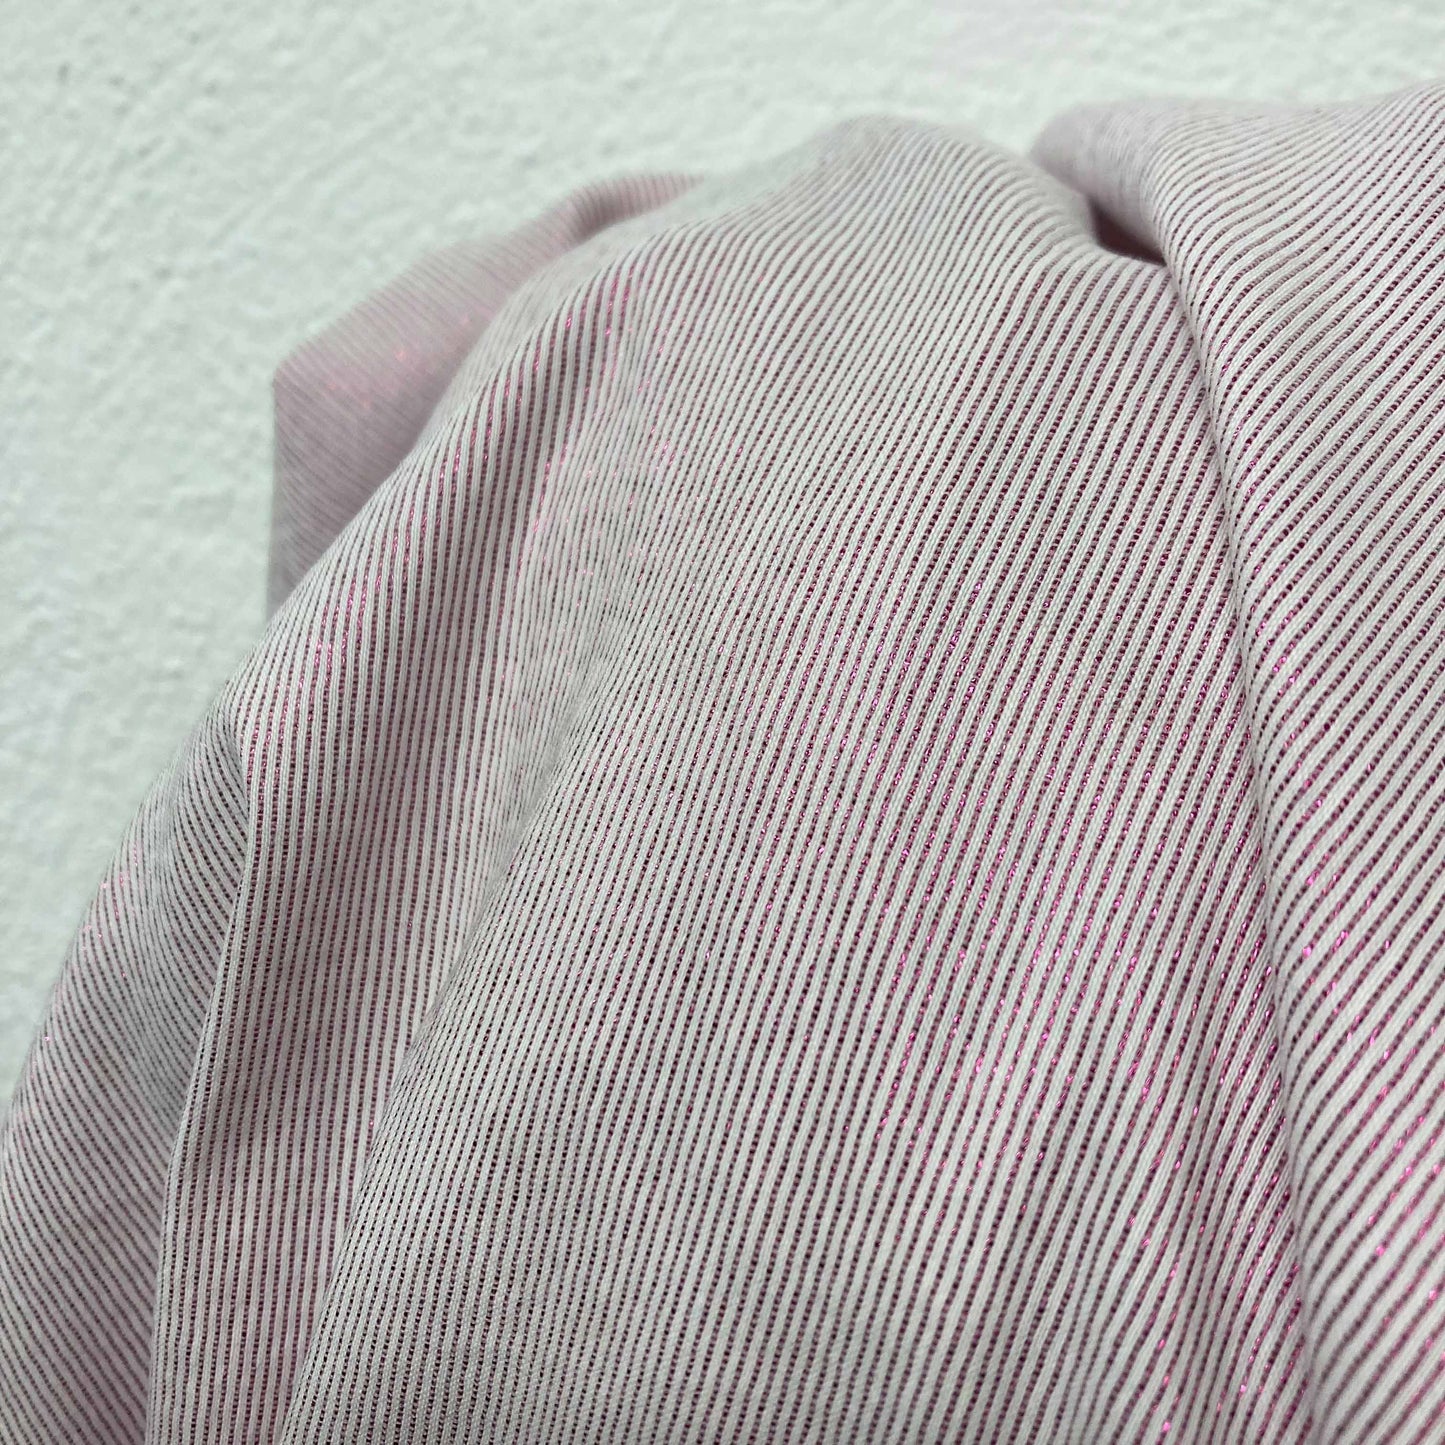 Bengaline Fabric - Metallic pink